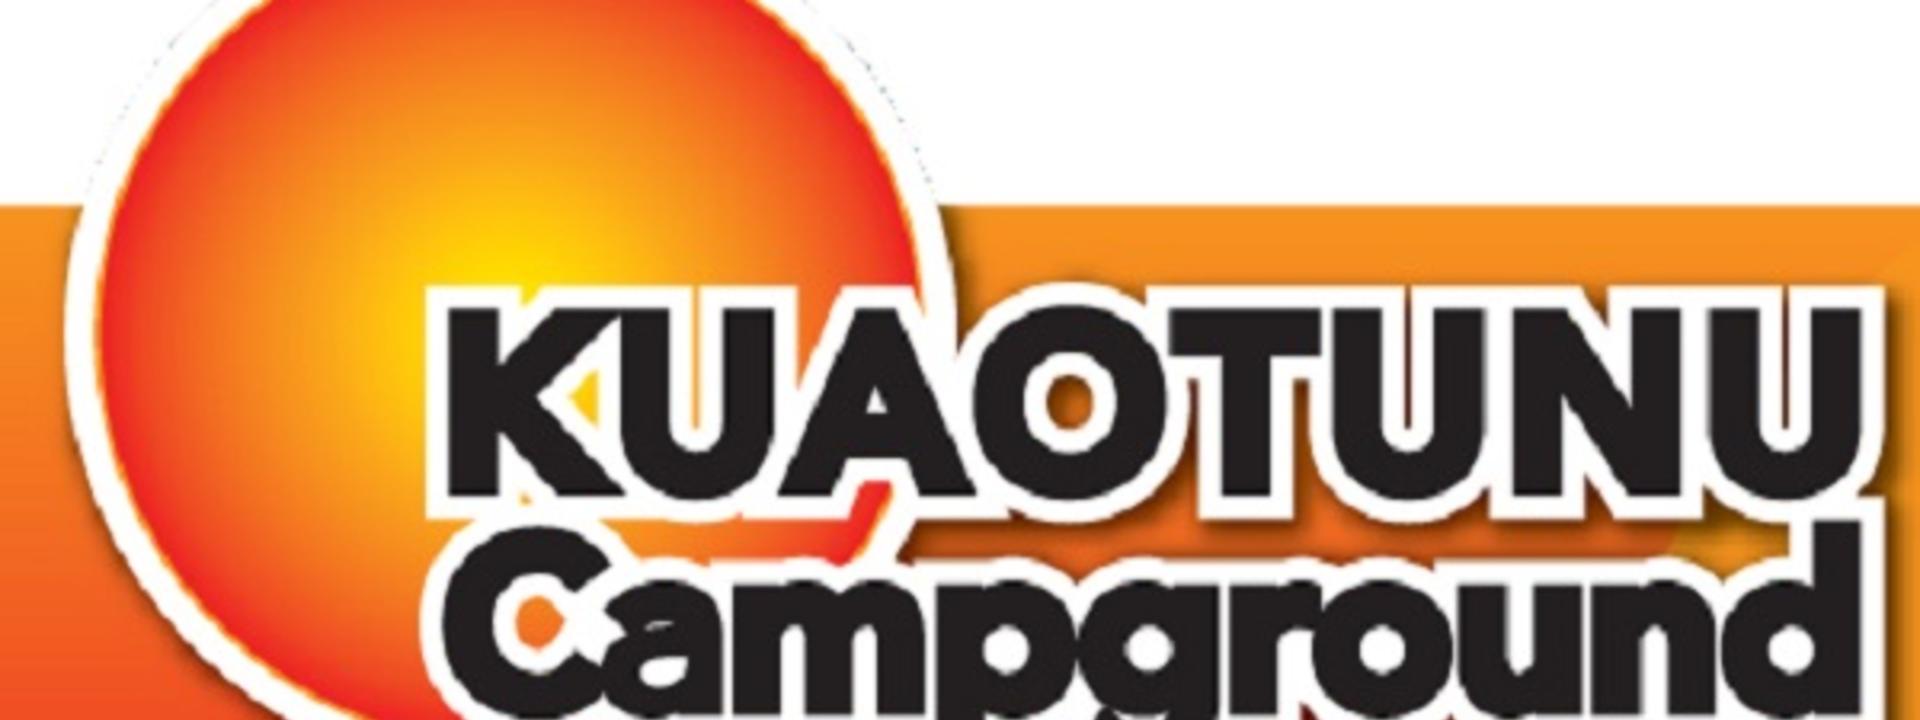 kuaotunu-logo1.jpg